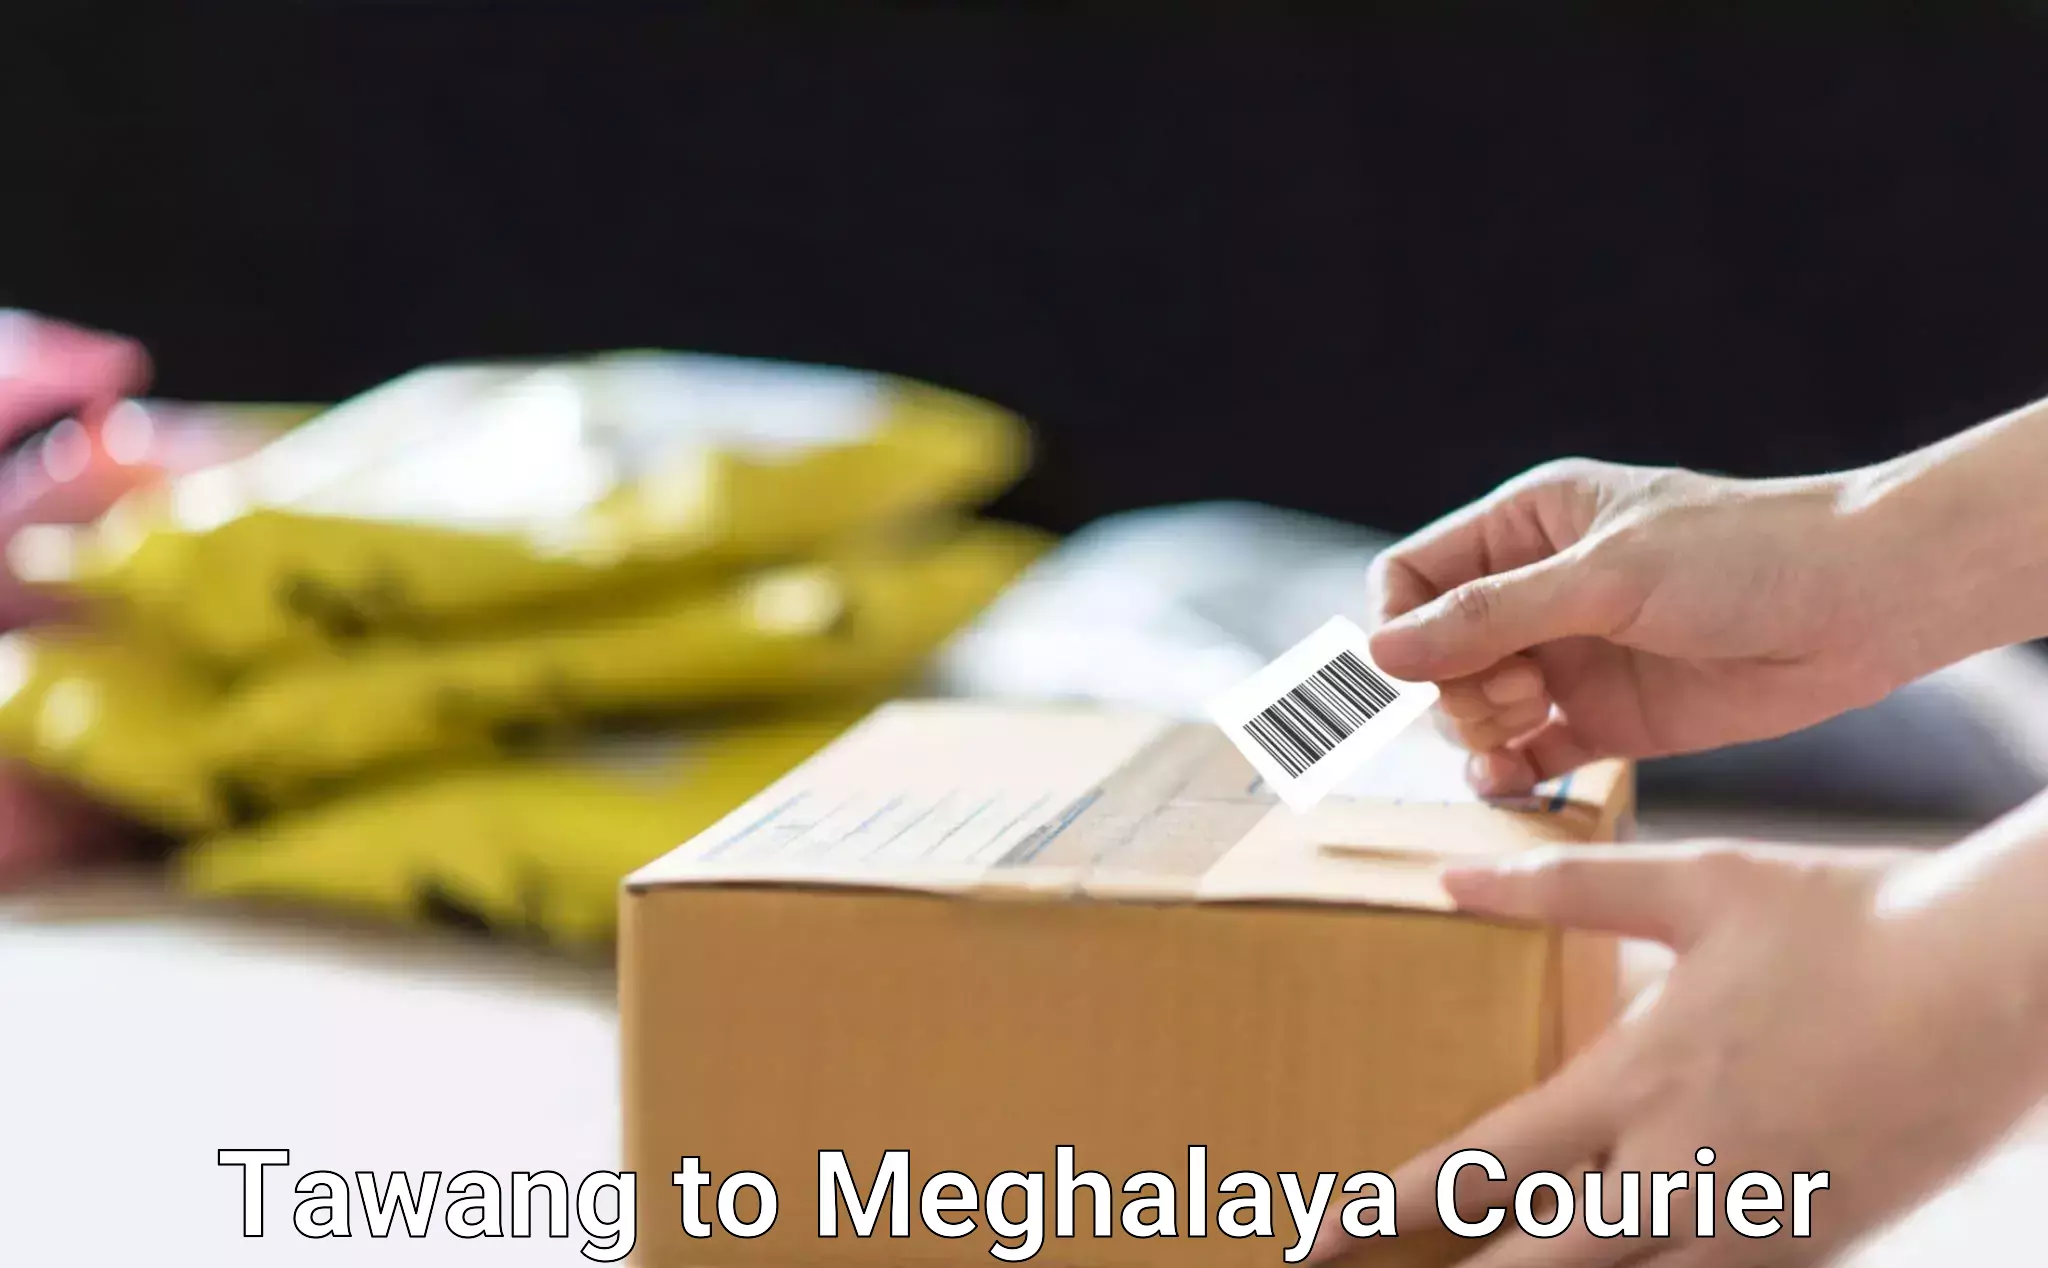 Business shipping needs Tawang to Meghalaya